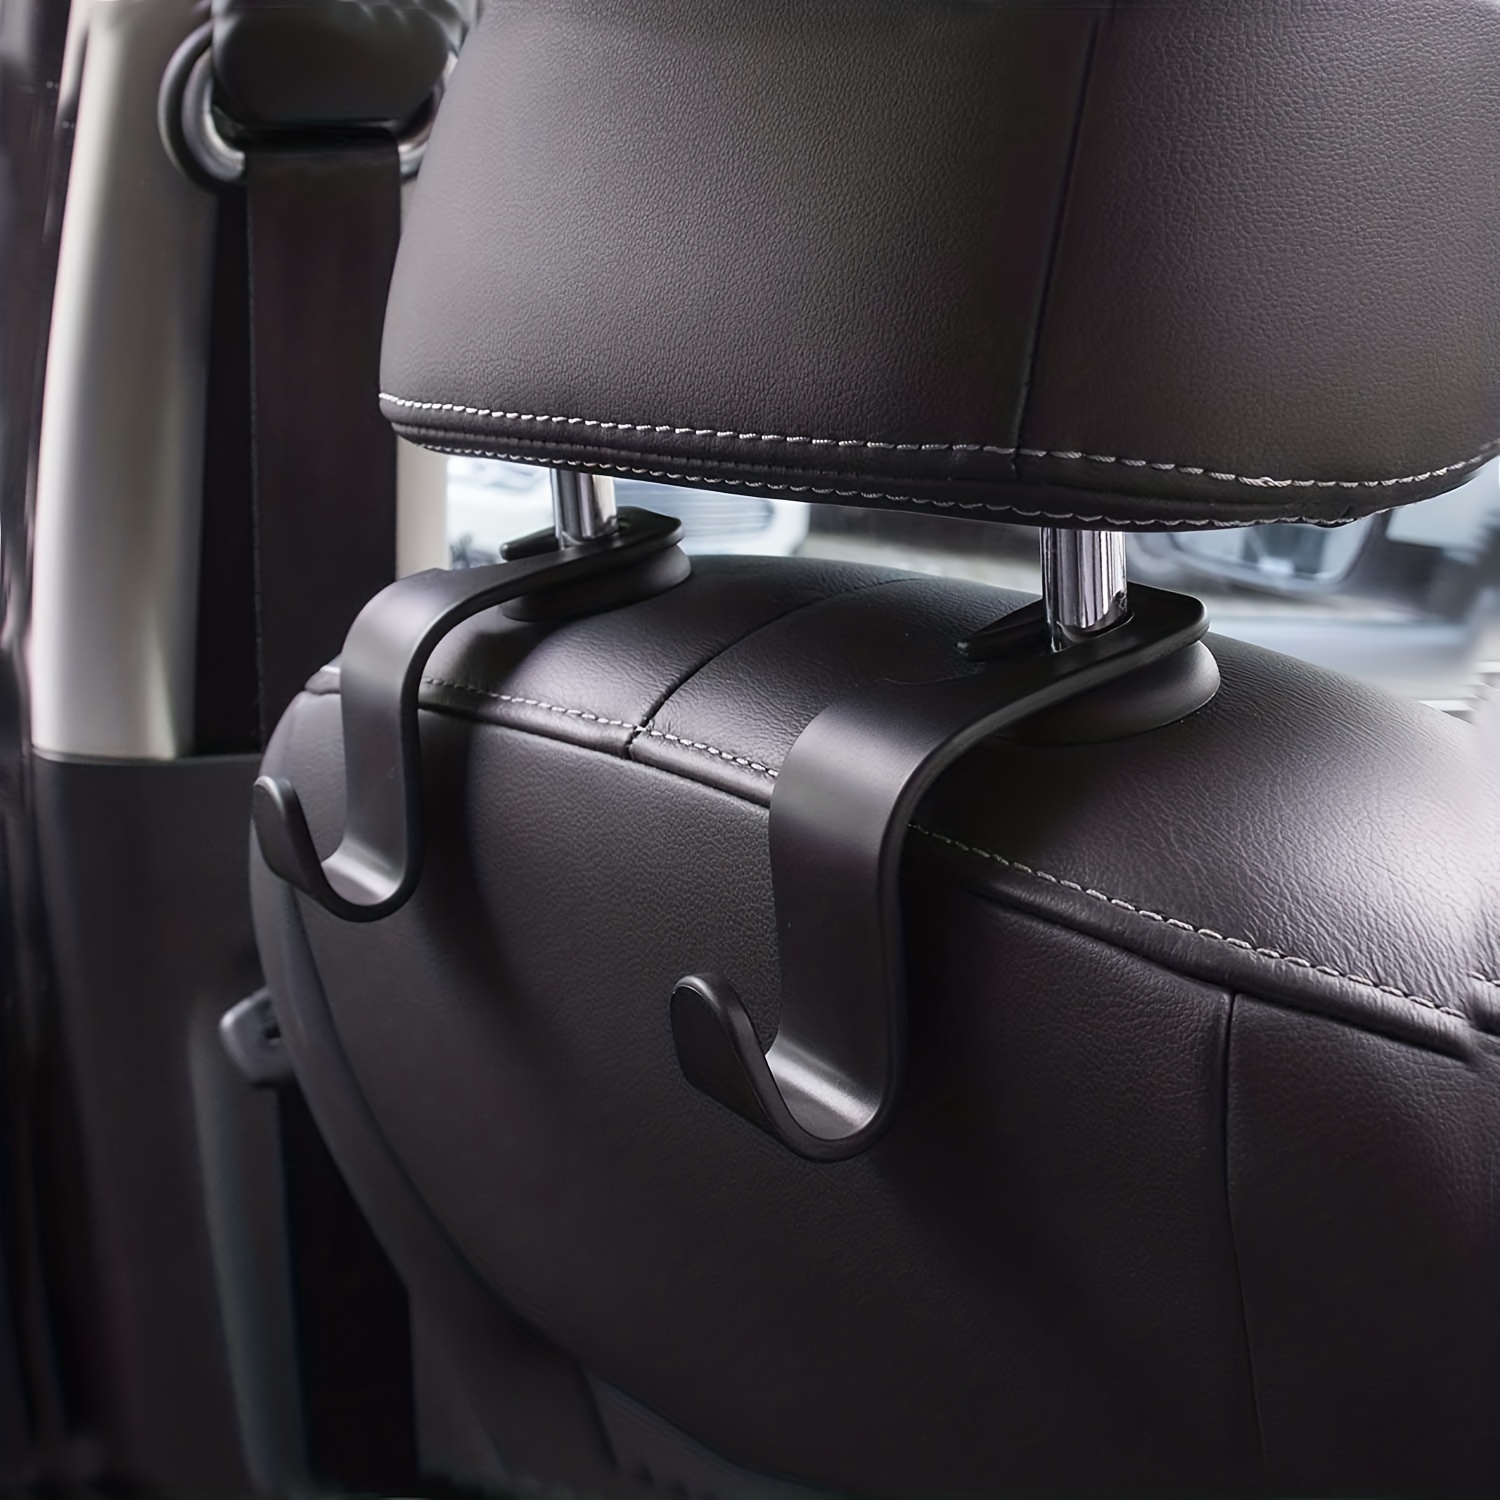 4Pcs Car Back Seat Bag Handbag Hooks Plastic Headrest Hanger